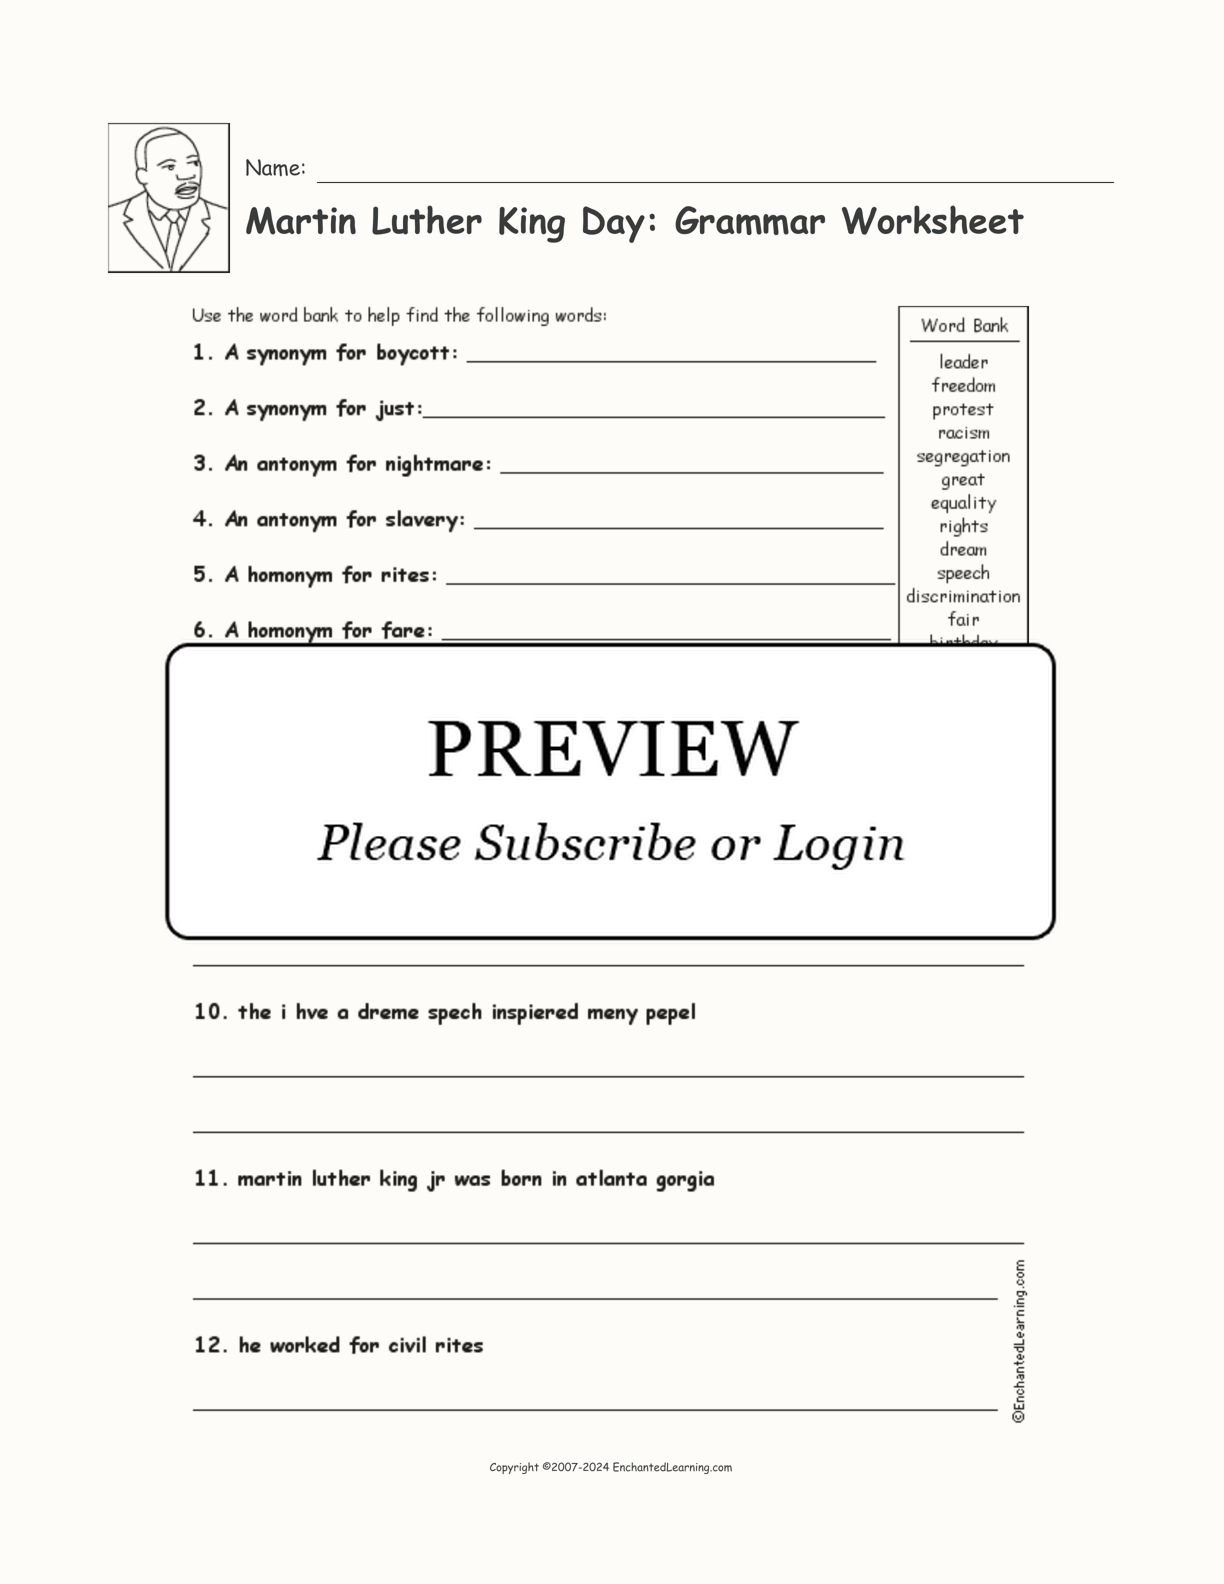 Martin Luther King Day: Grammar Worksheet interactive worksheet page 1